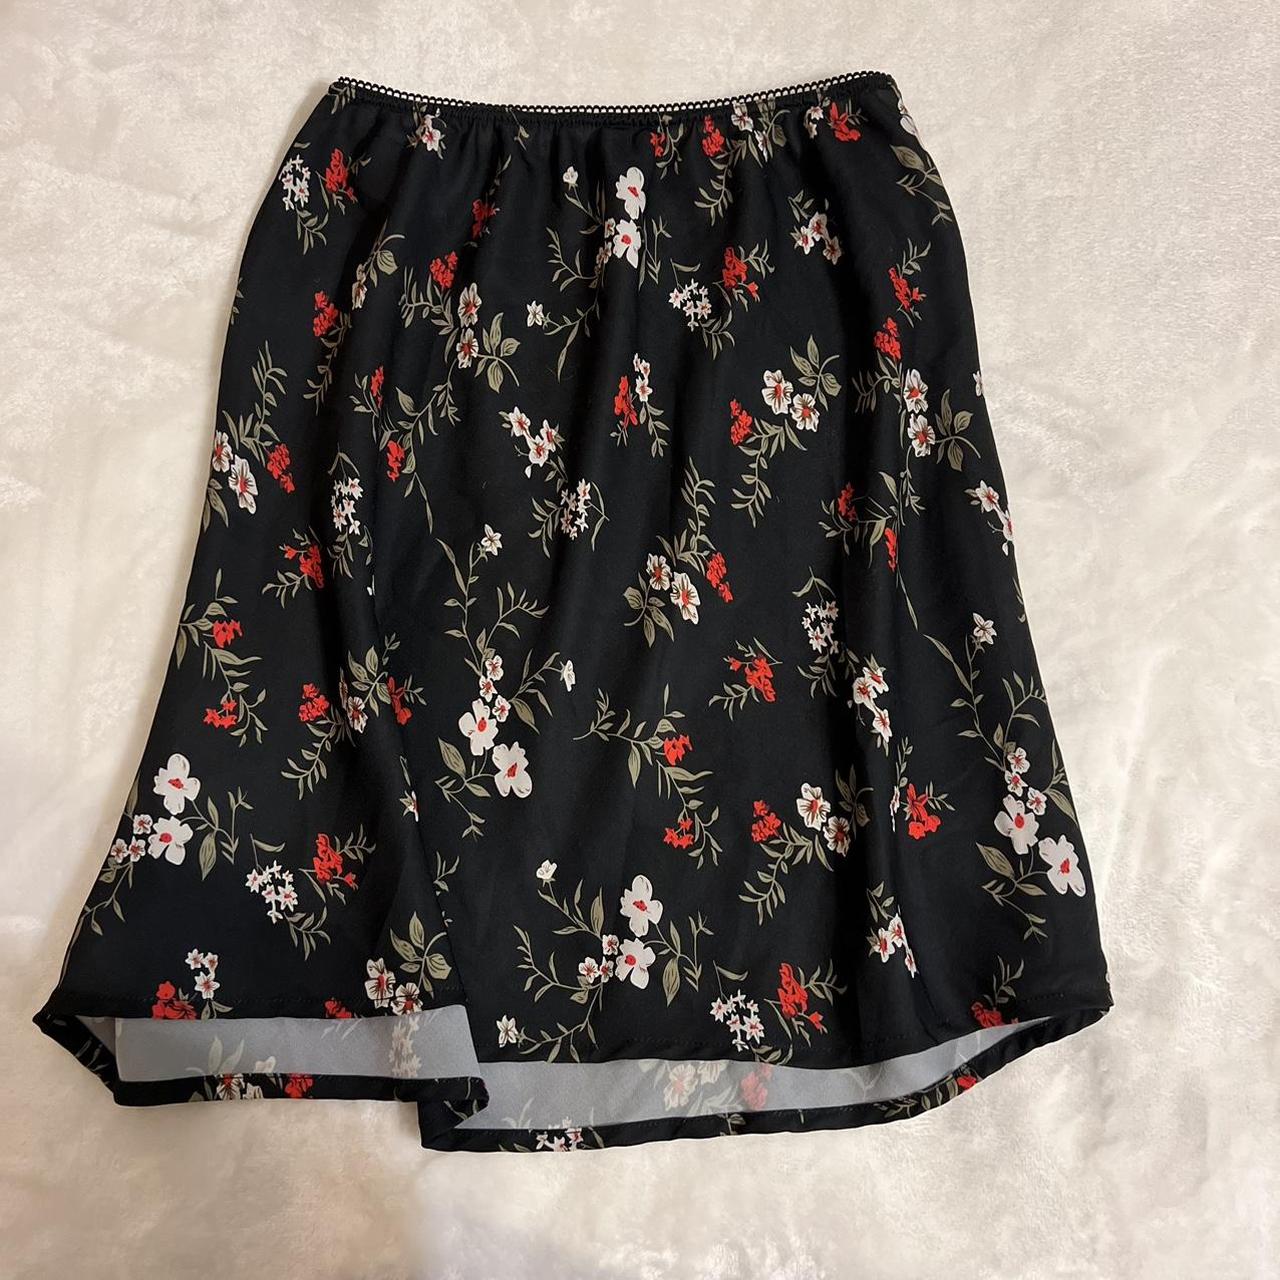 Black Floral Skirt 🥀 - size S - silky, lightweight,... - Depop